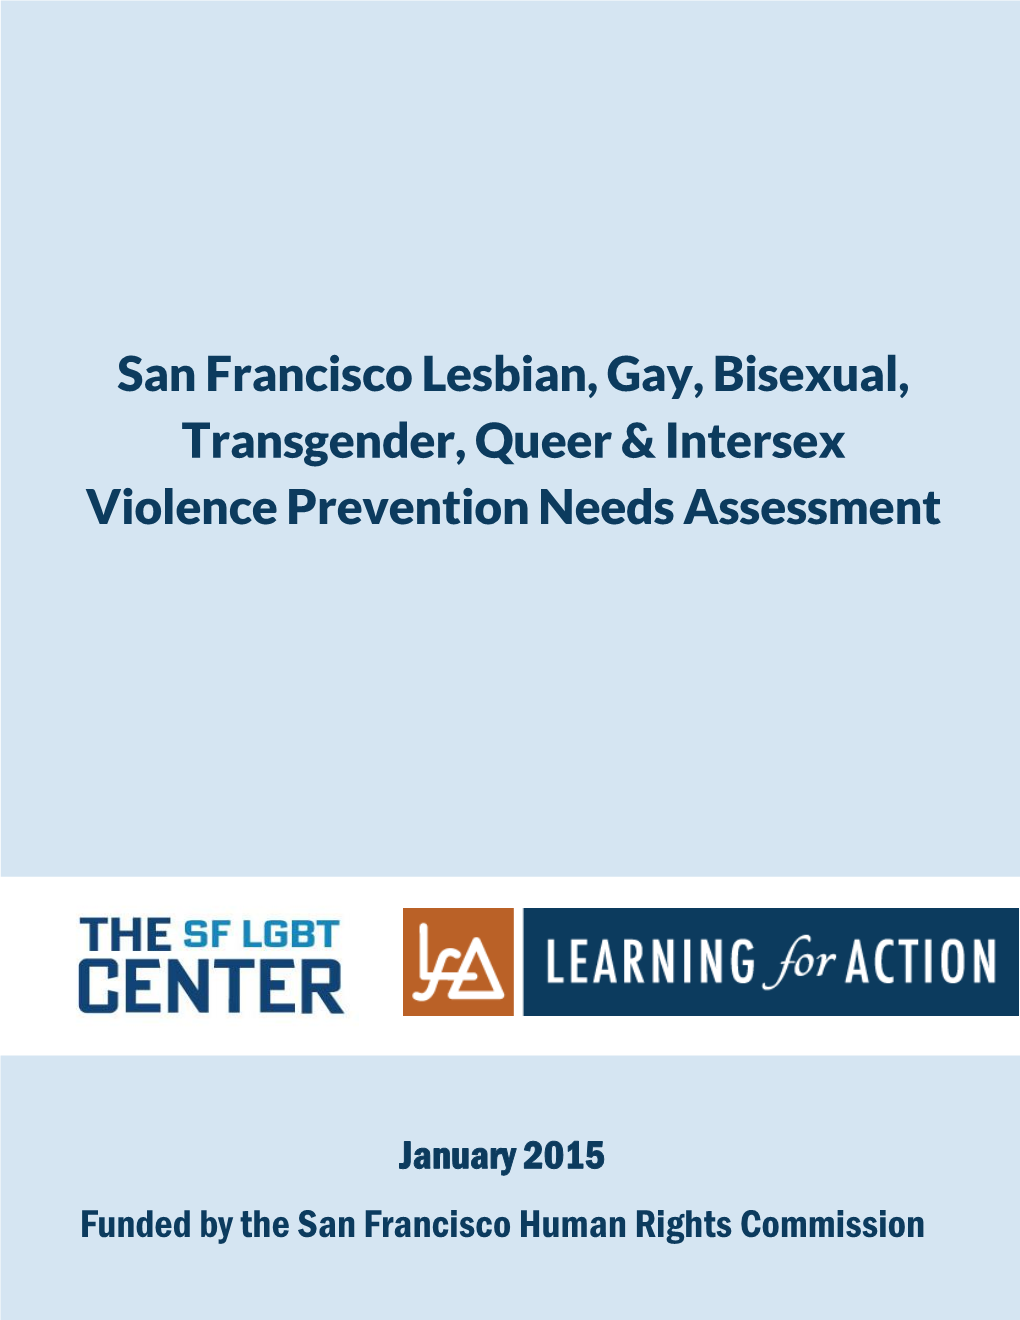 San Francisco Lesbian, Gay, Bisexual, Transgender, Queer & Intersex Violence Prevention Needs Assessment